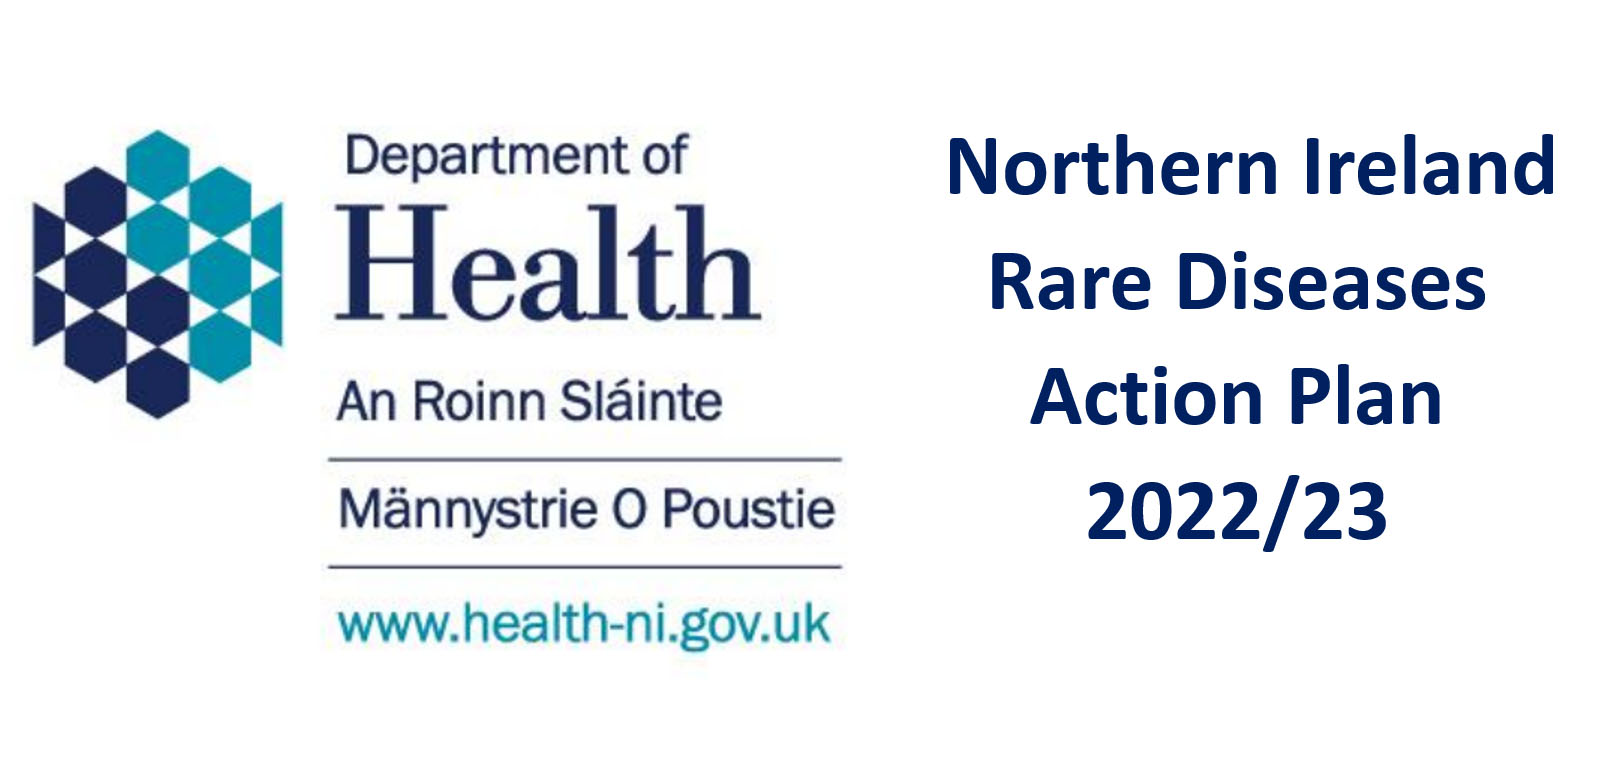 NI rare disease action plan image of front page